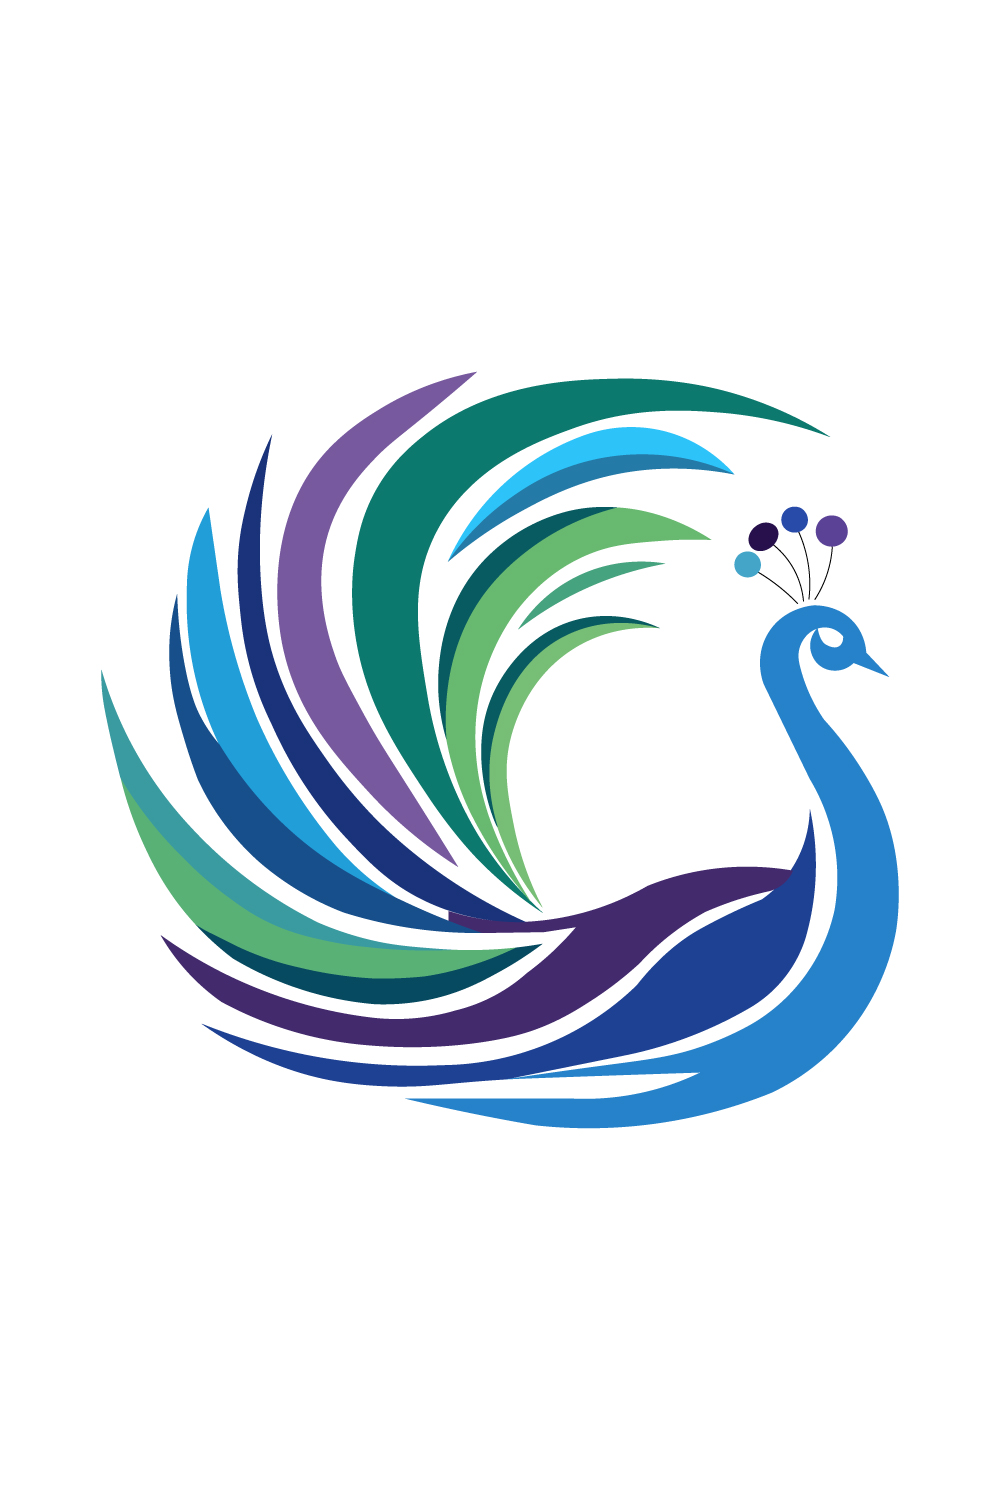 Peacock's logo pinterest preview image.